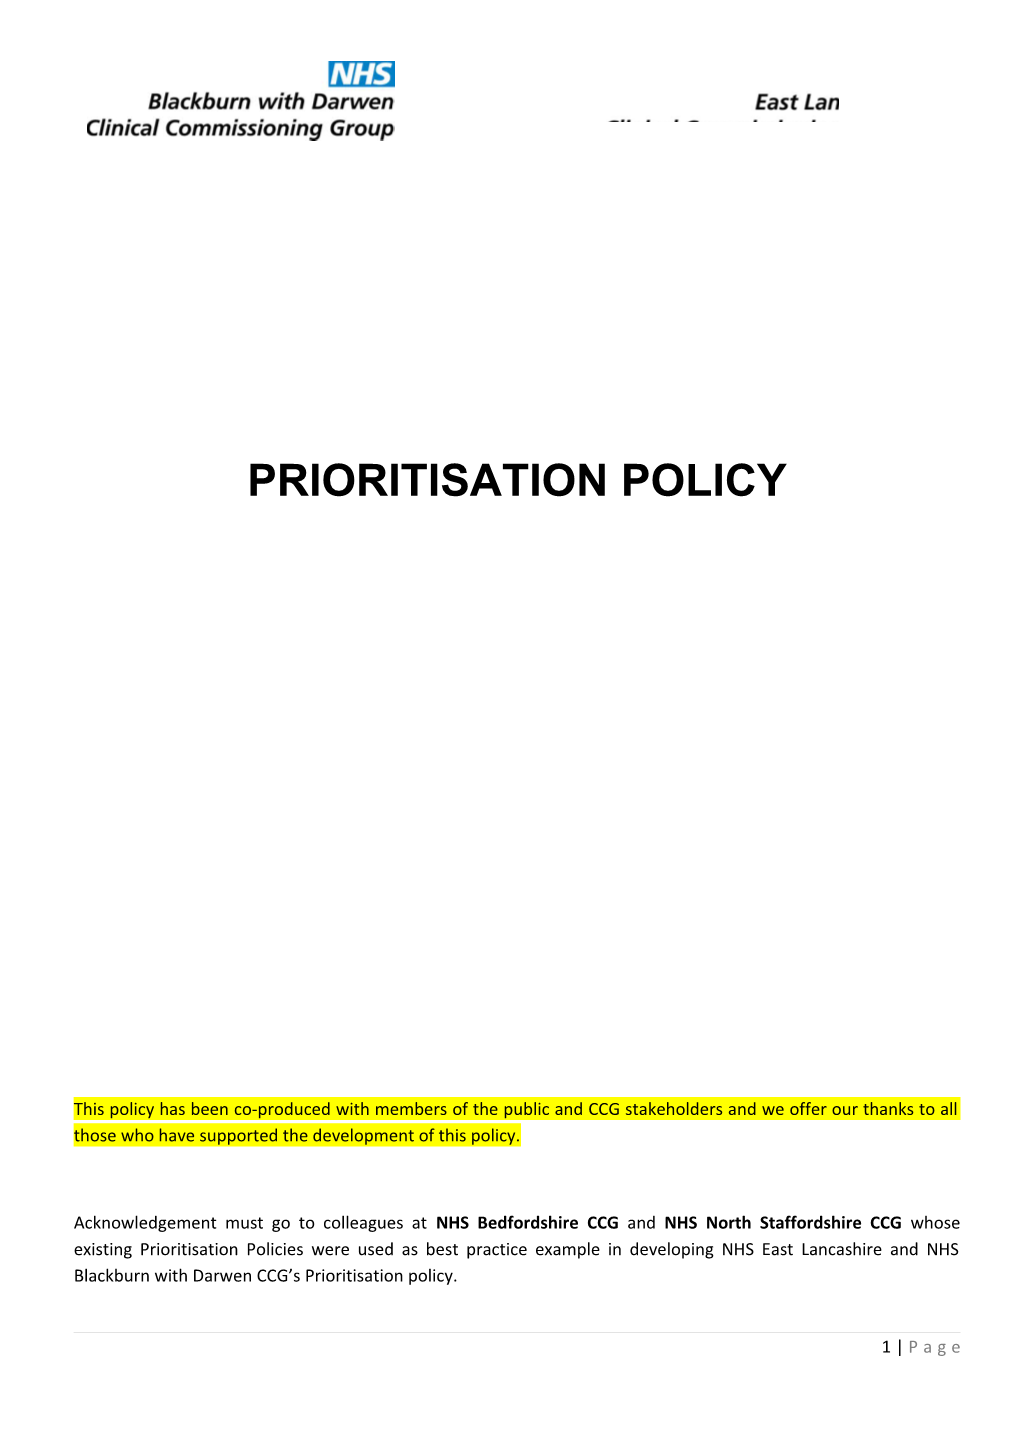 Prioritisation Policy